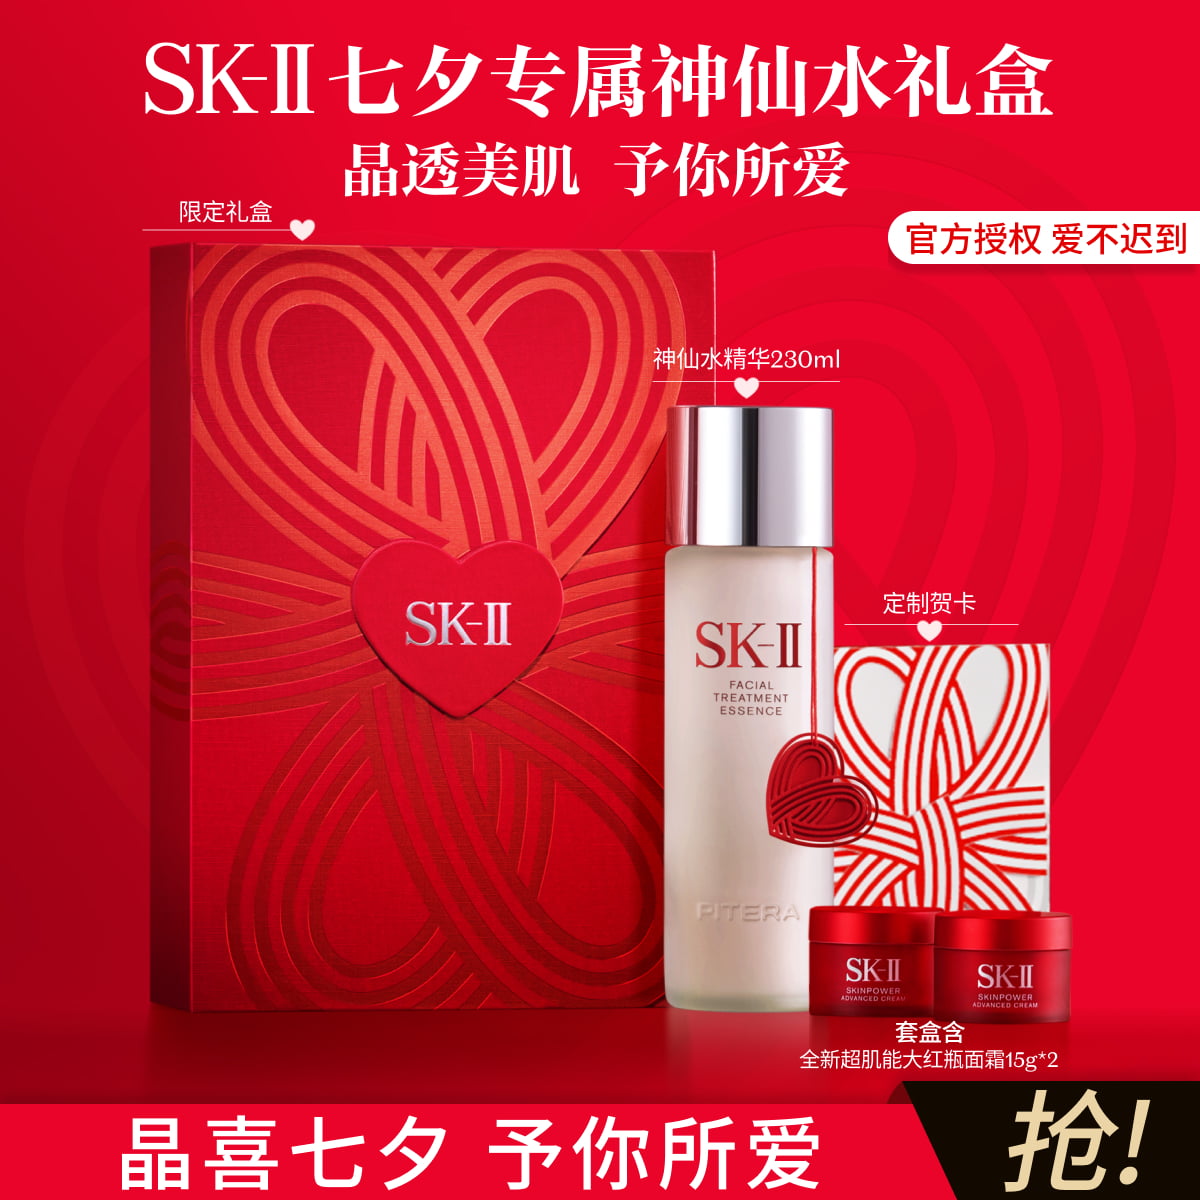 SK-II 节日限定神仙水230ml精华液+90ml神仙水+30g大红瓶面霜 券后1570元